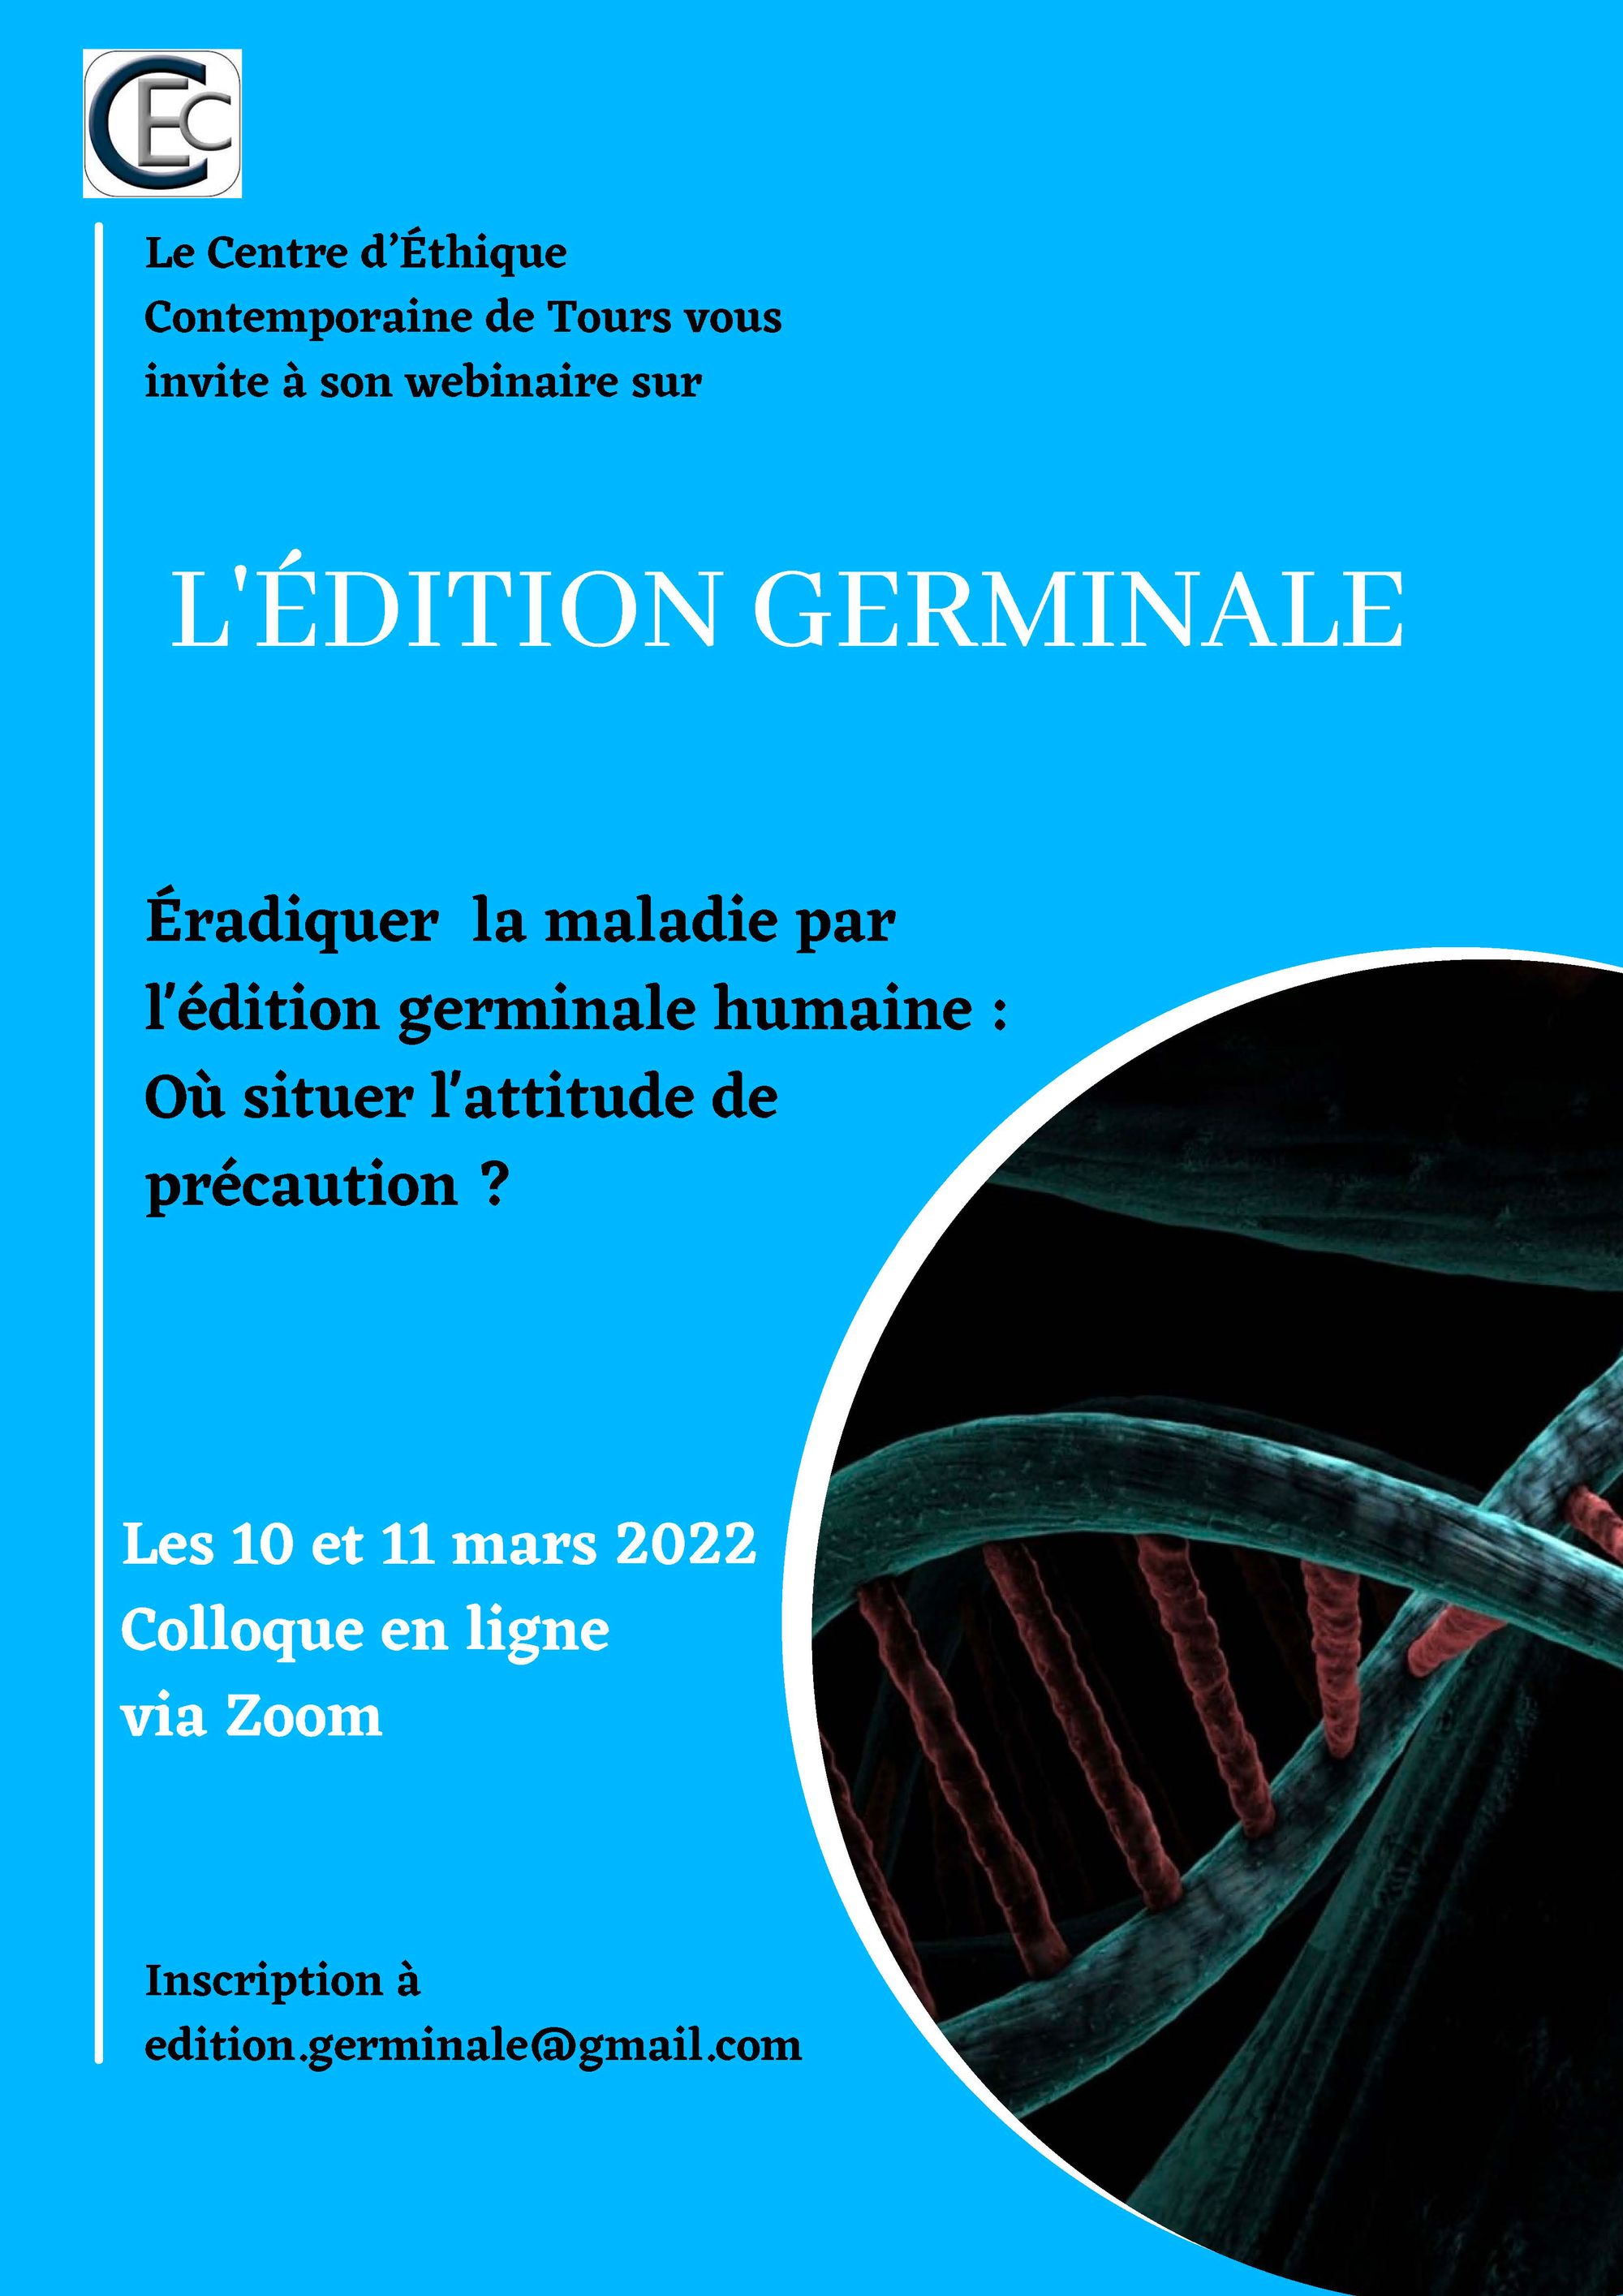 Edition germinale par Clémence Audran et Calypso Rambaldi : 10 et 11 mars 2022